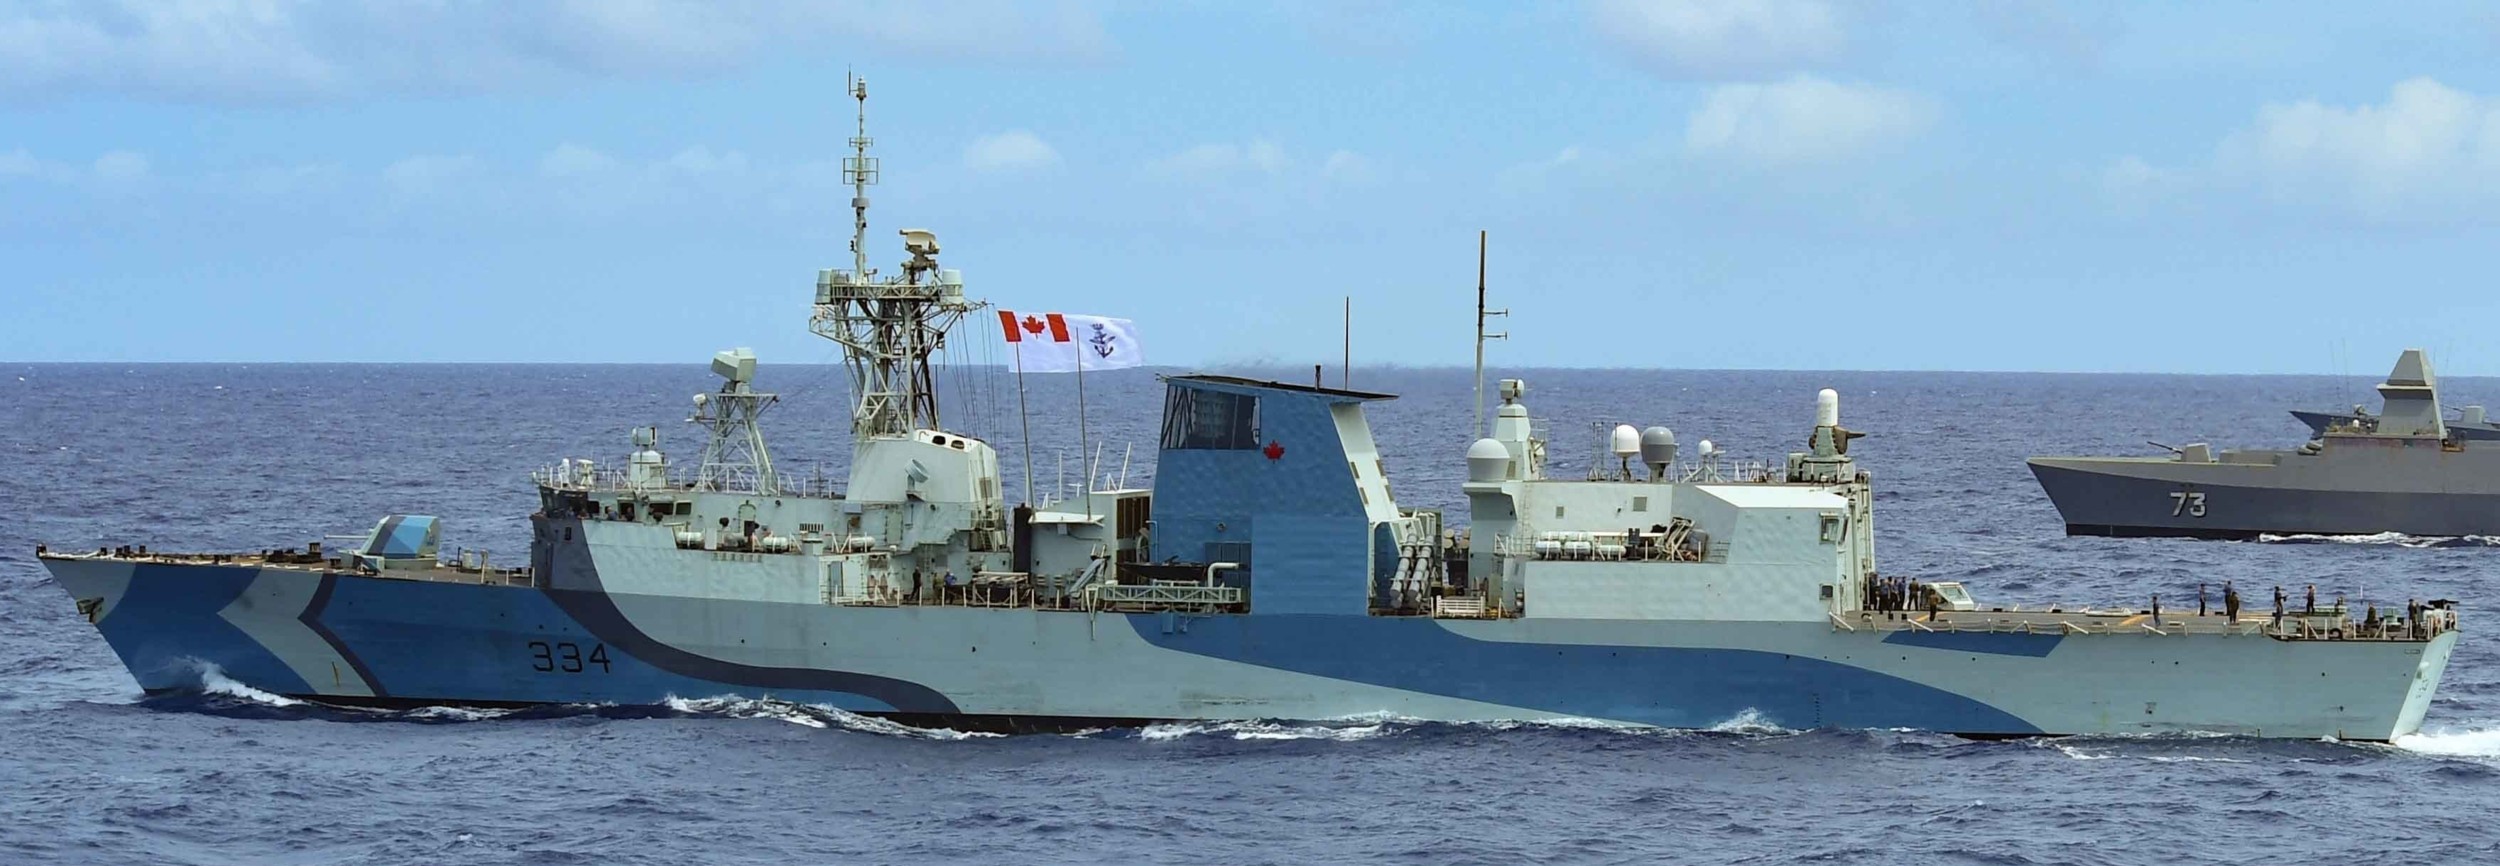 ffh-334 hmcs regina halifax class helicopter patrol frigate ncsm royal canadian navy 38